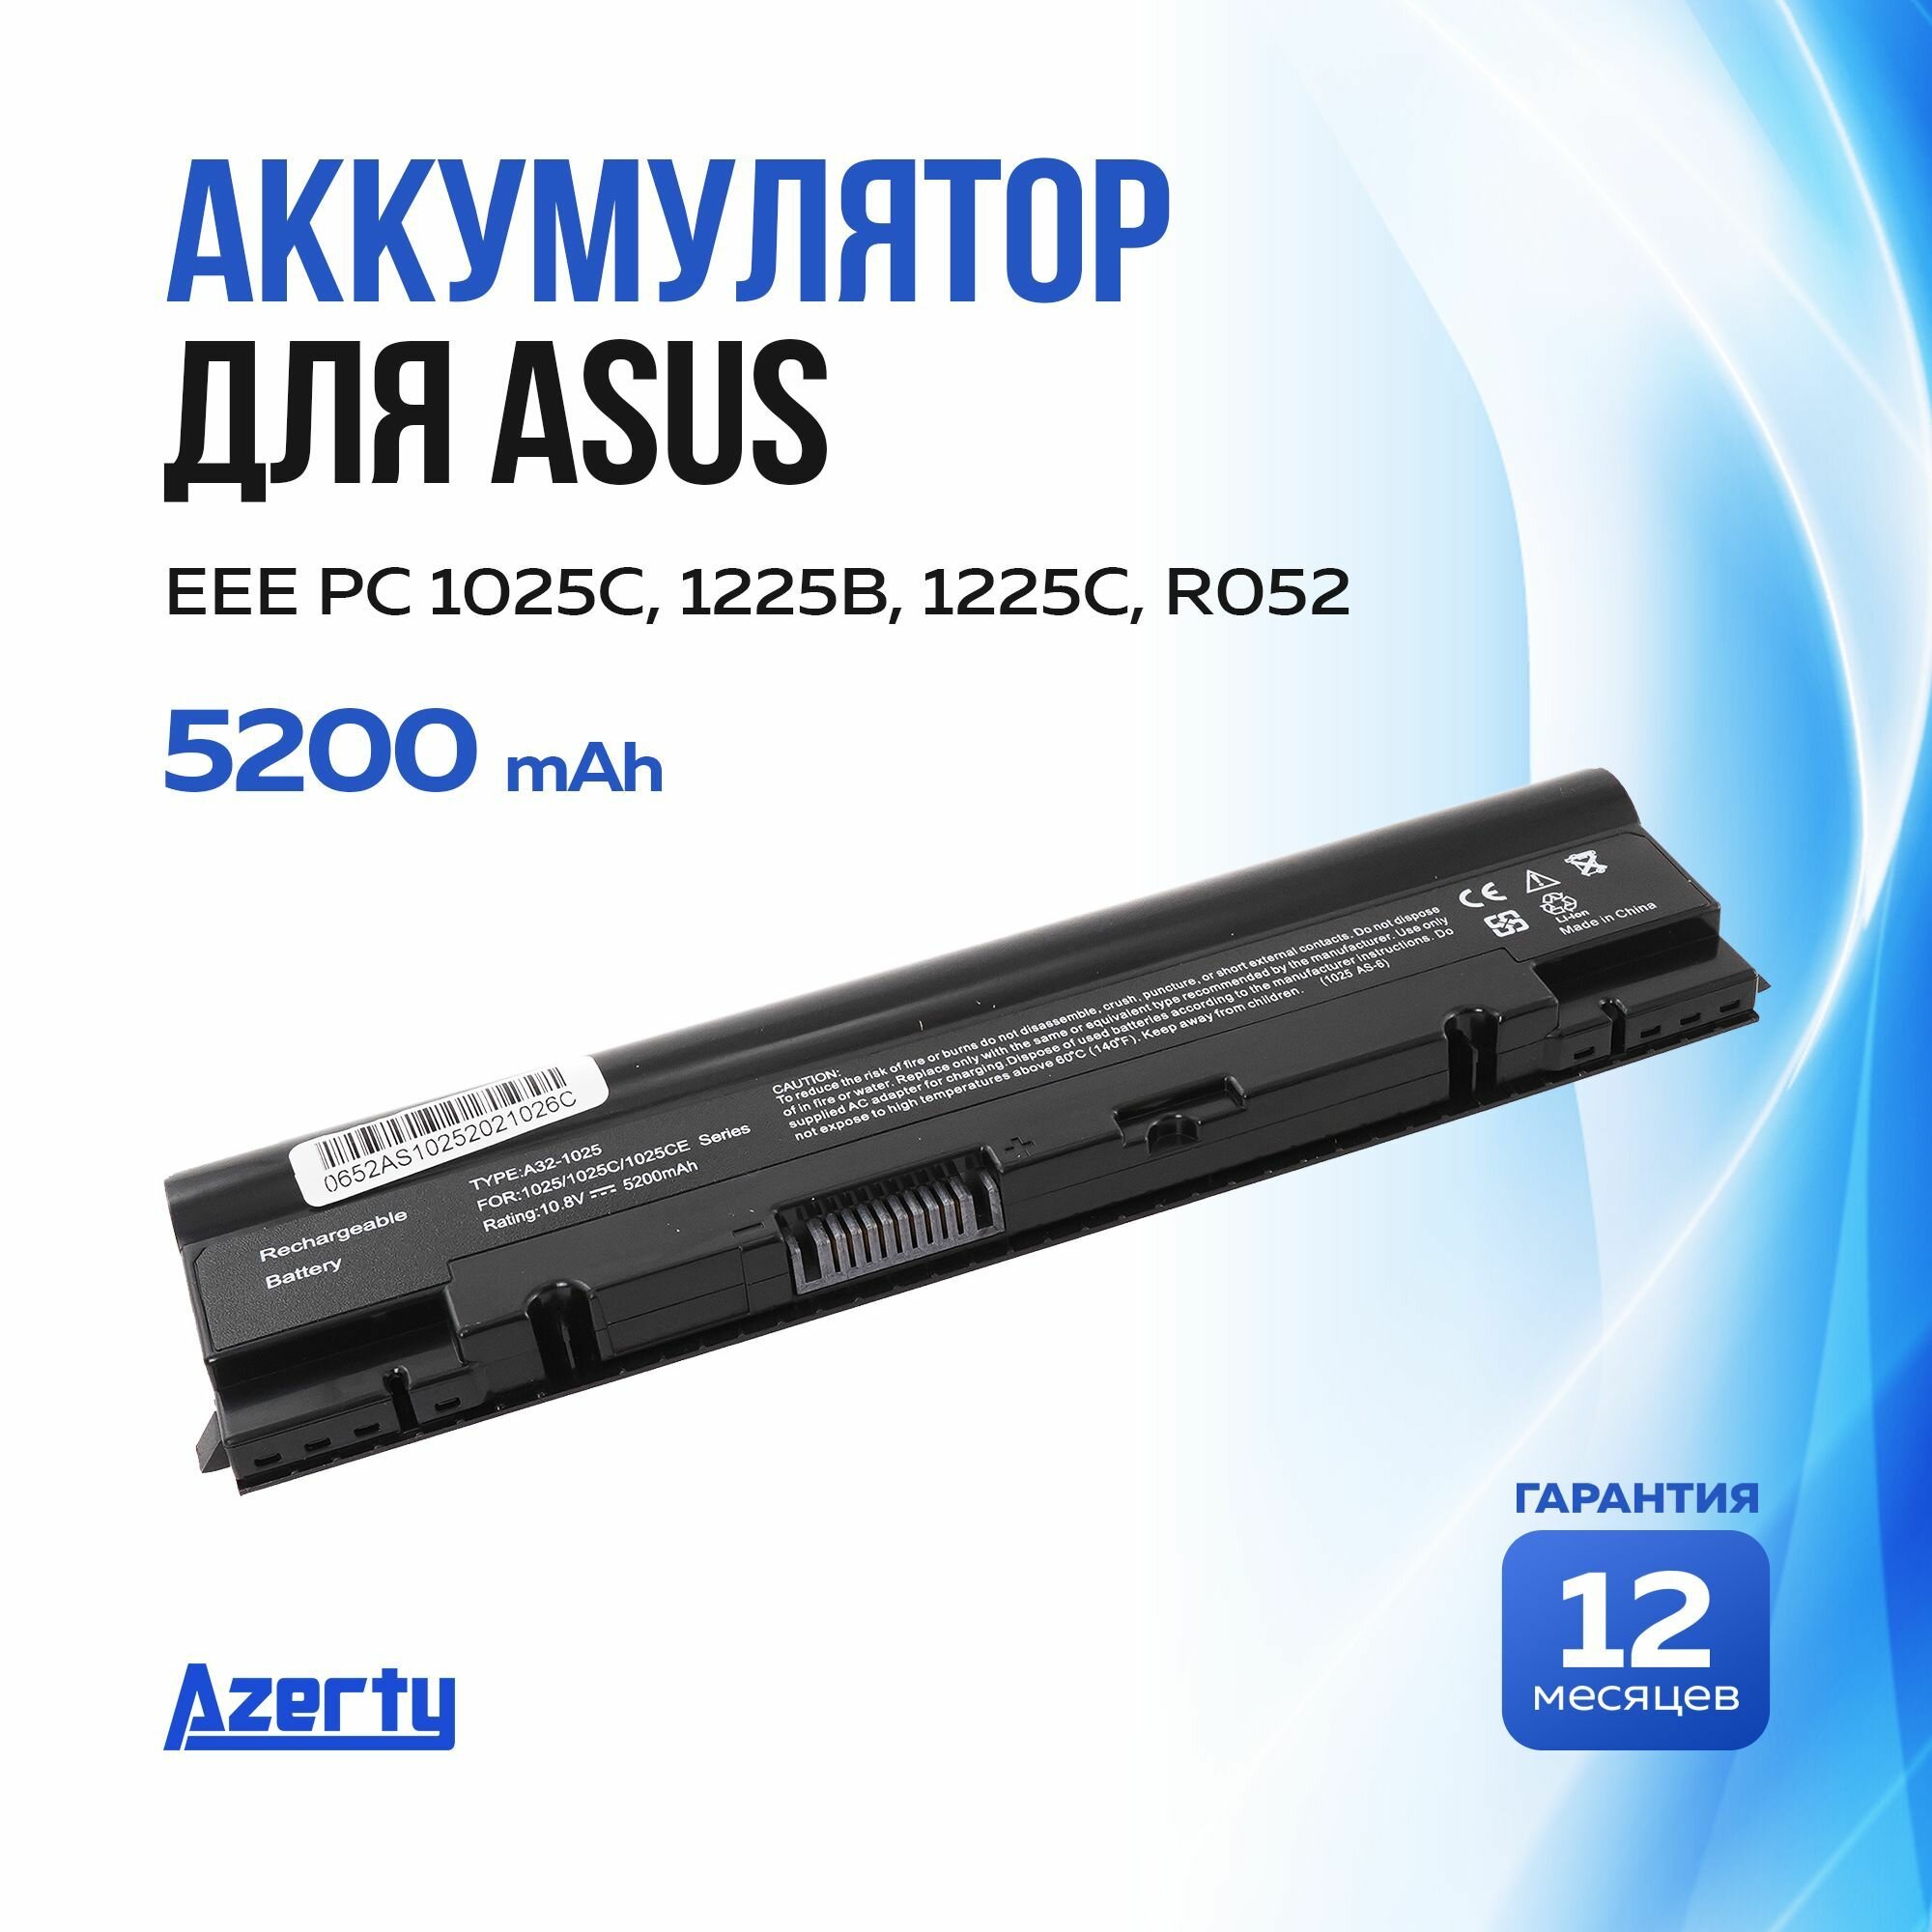 Аккумулятор A32-1025 для Asus Eee PC 1025C / 1225B / R052C (A31-1025)